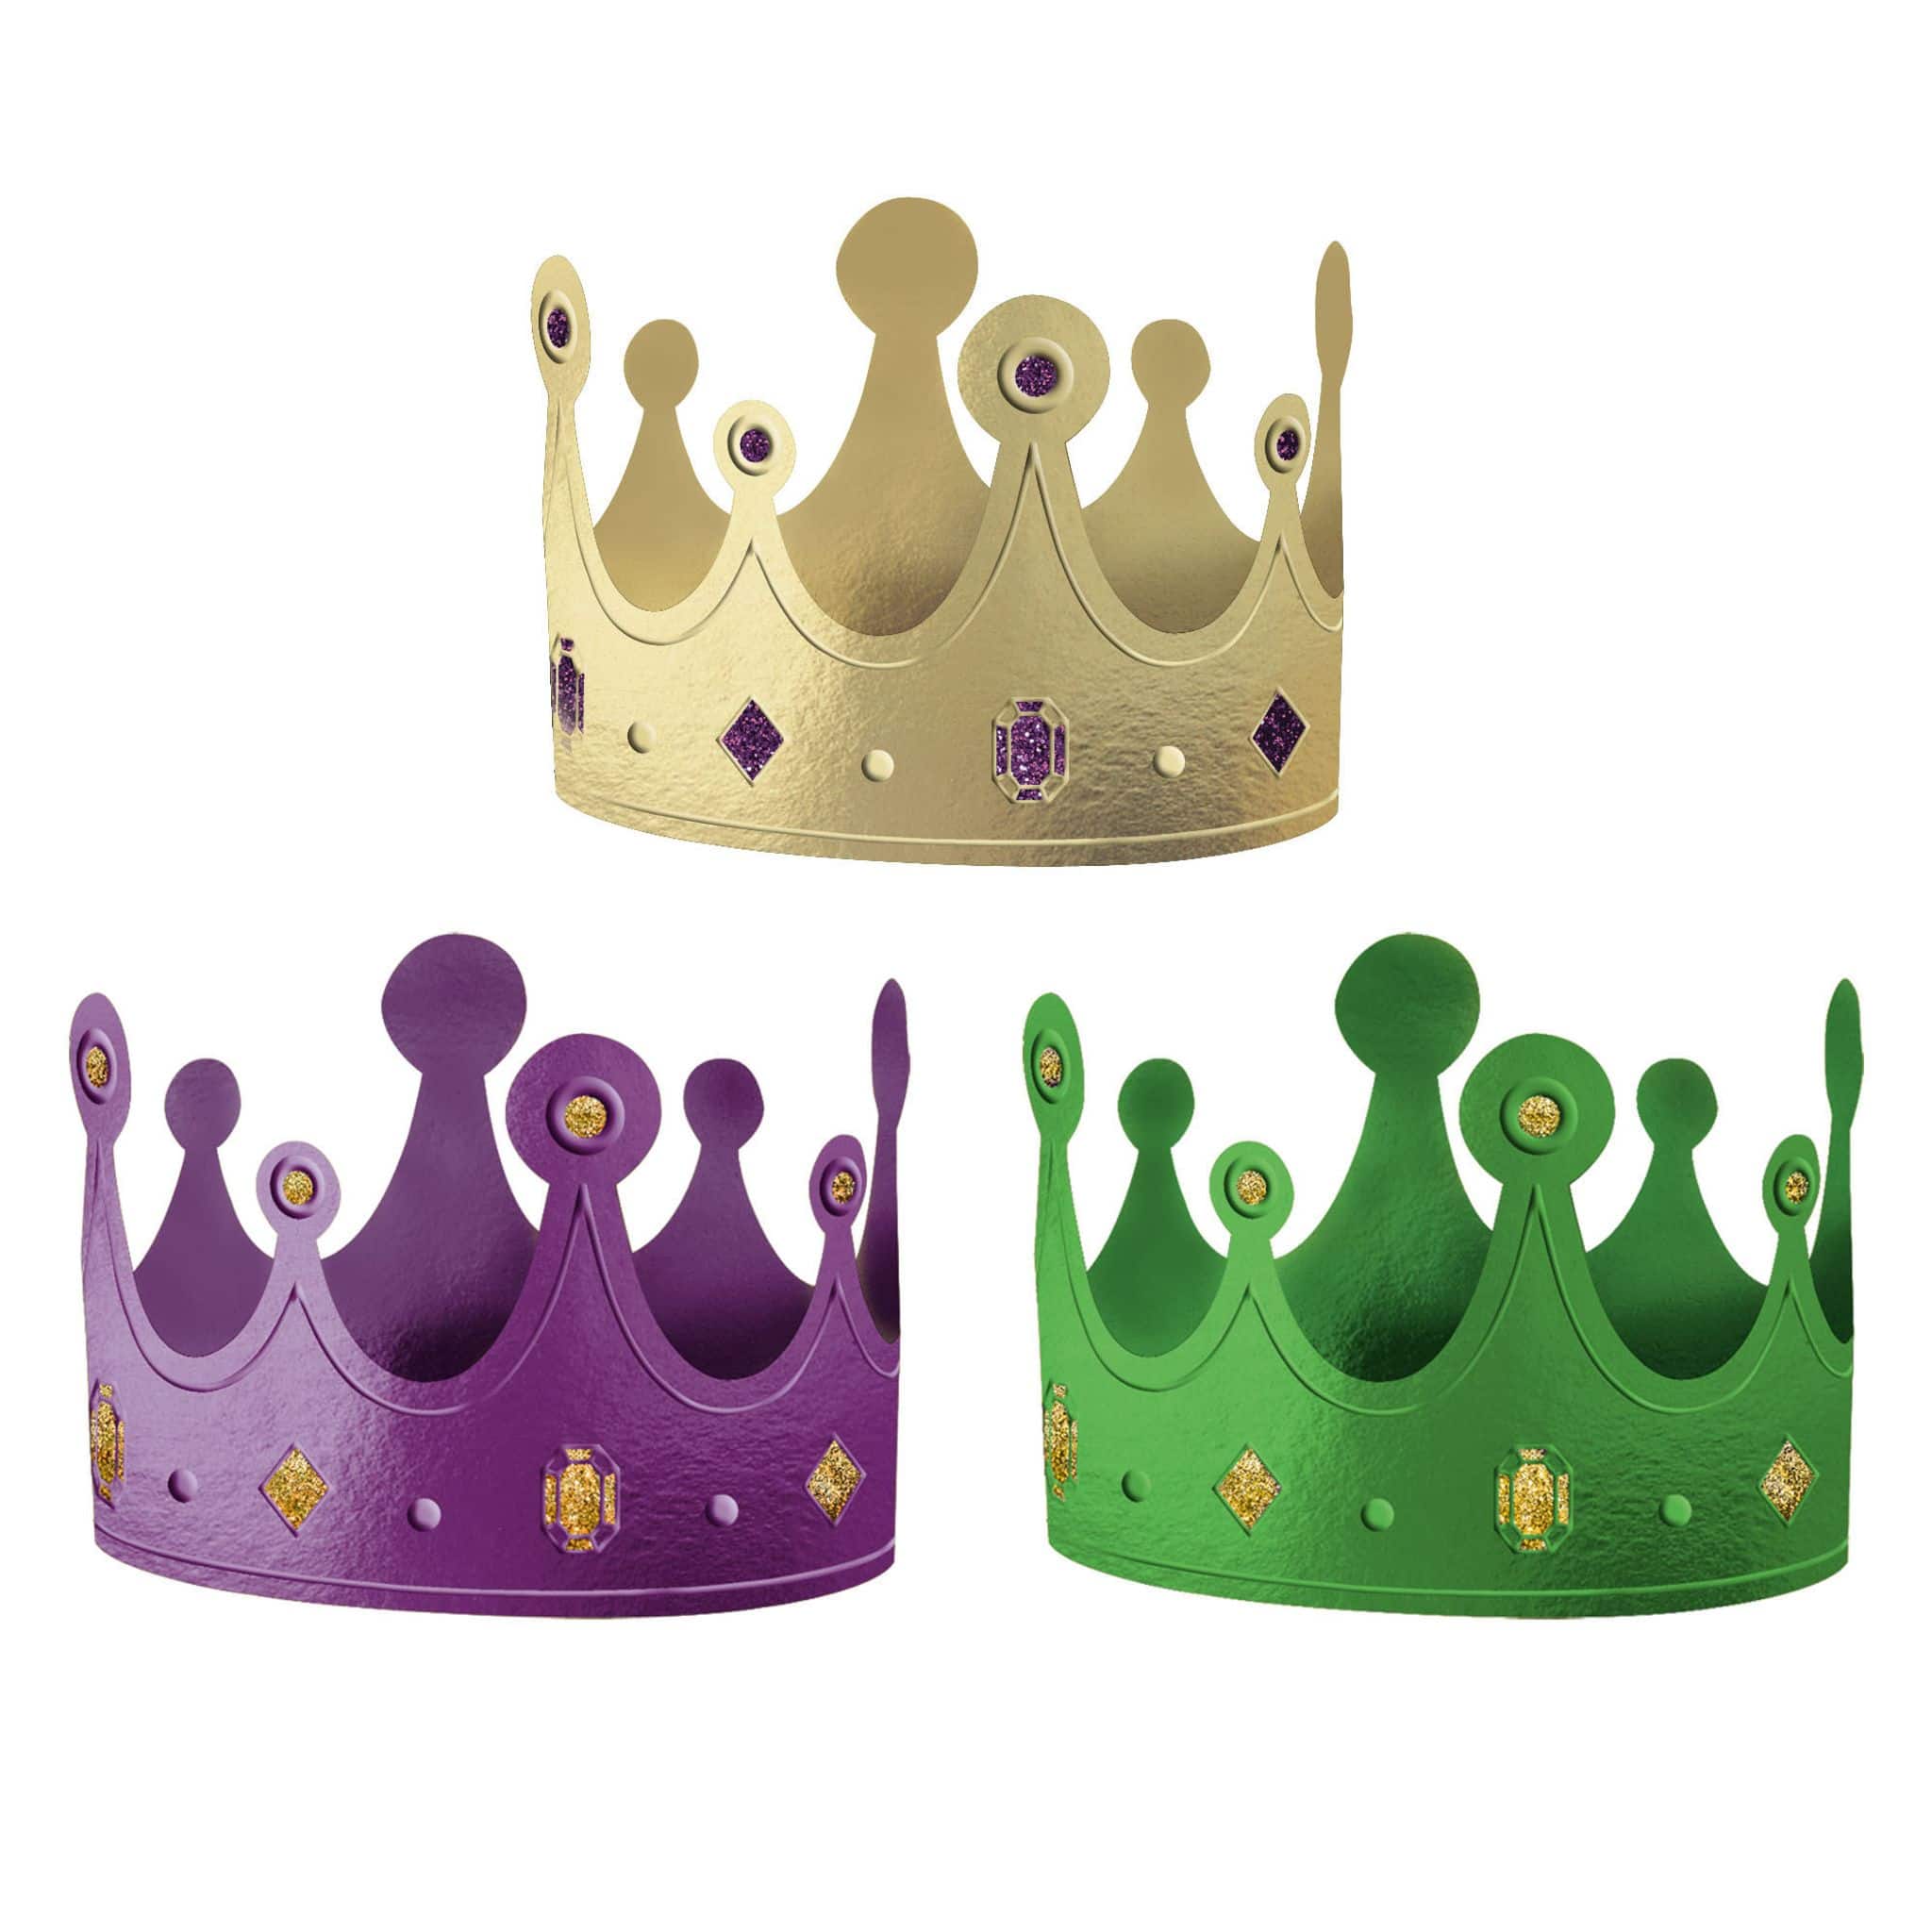 Mardi Gras Crowns